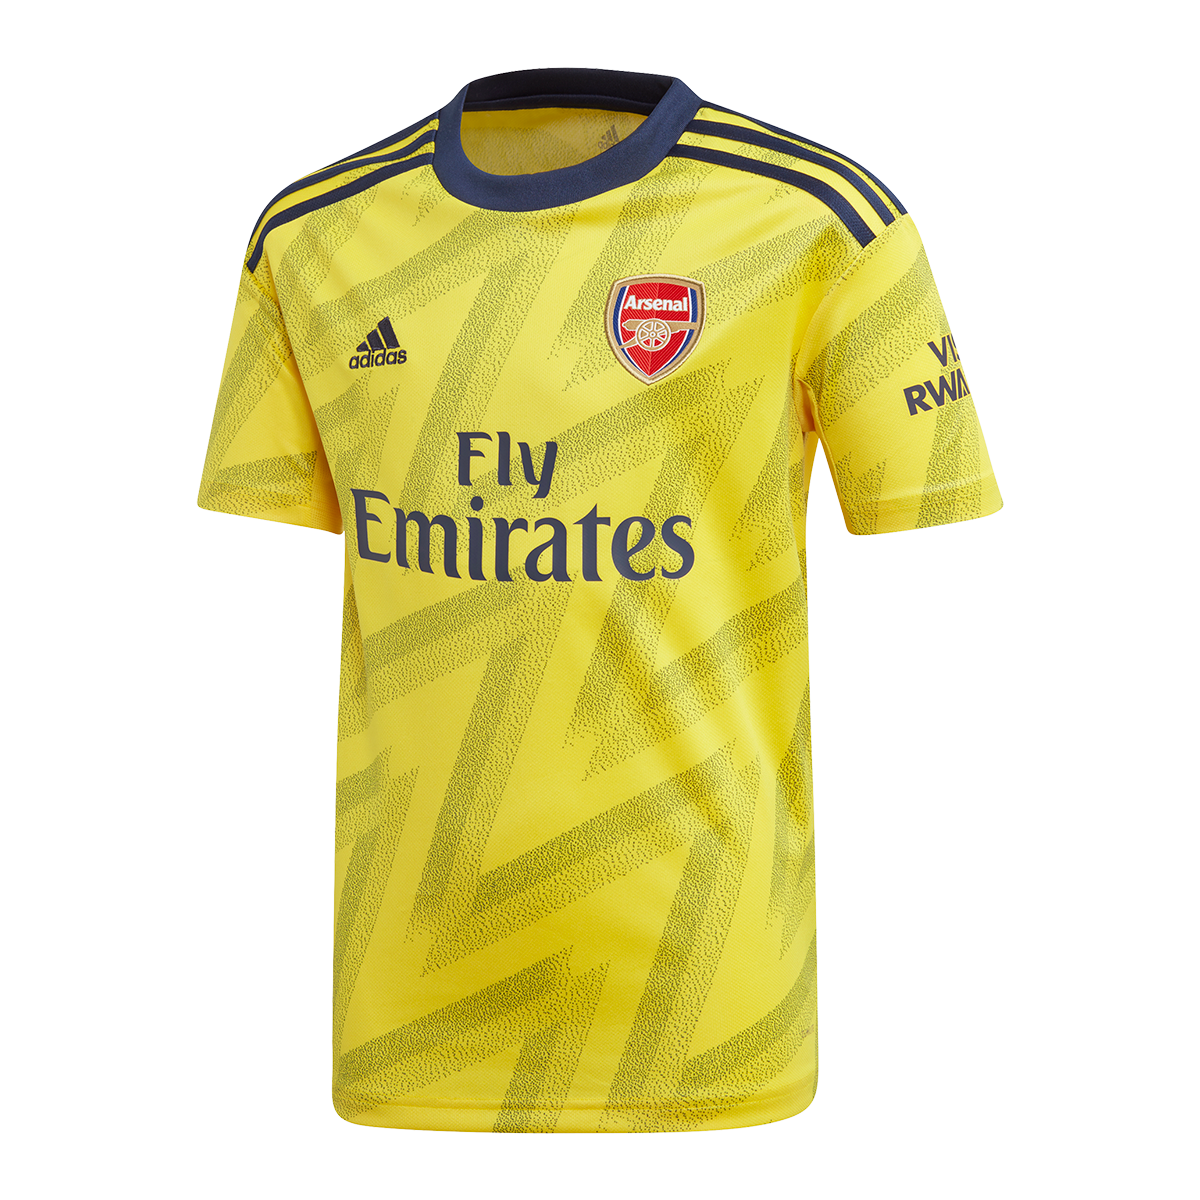 Jersey Adidas Arsenal Fc Segunda Equipacion 2019 2020 Nino Yellow